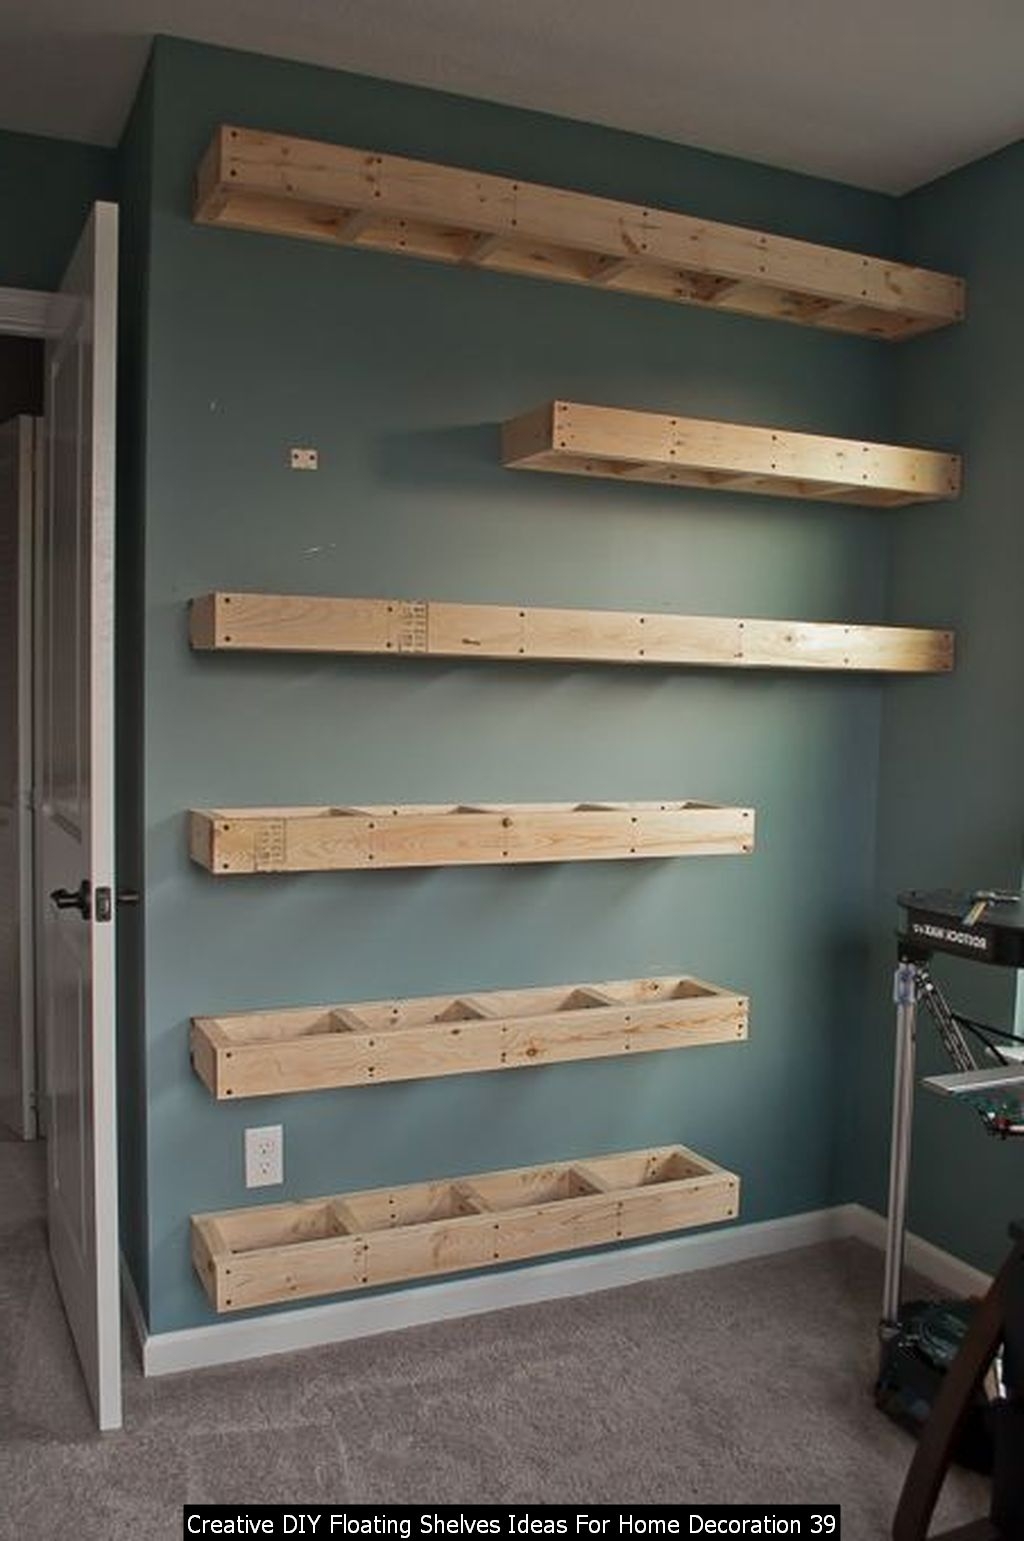 Creative DIY Floating Shelves Ideas For Home Decoration 39